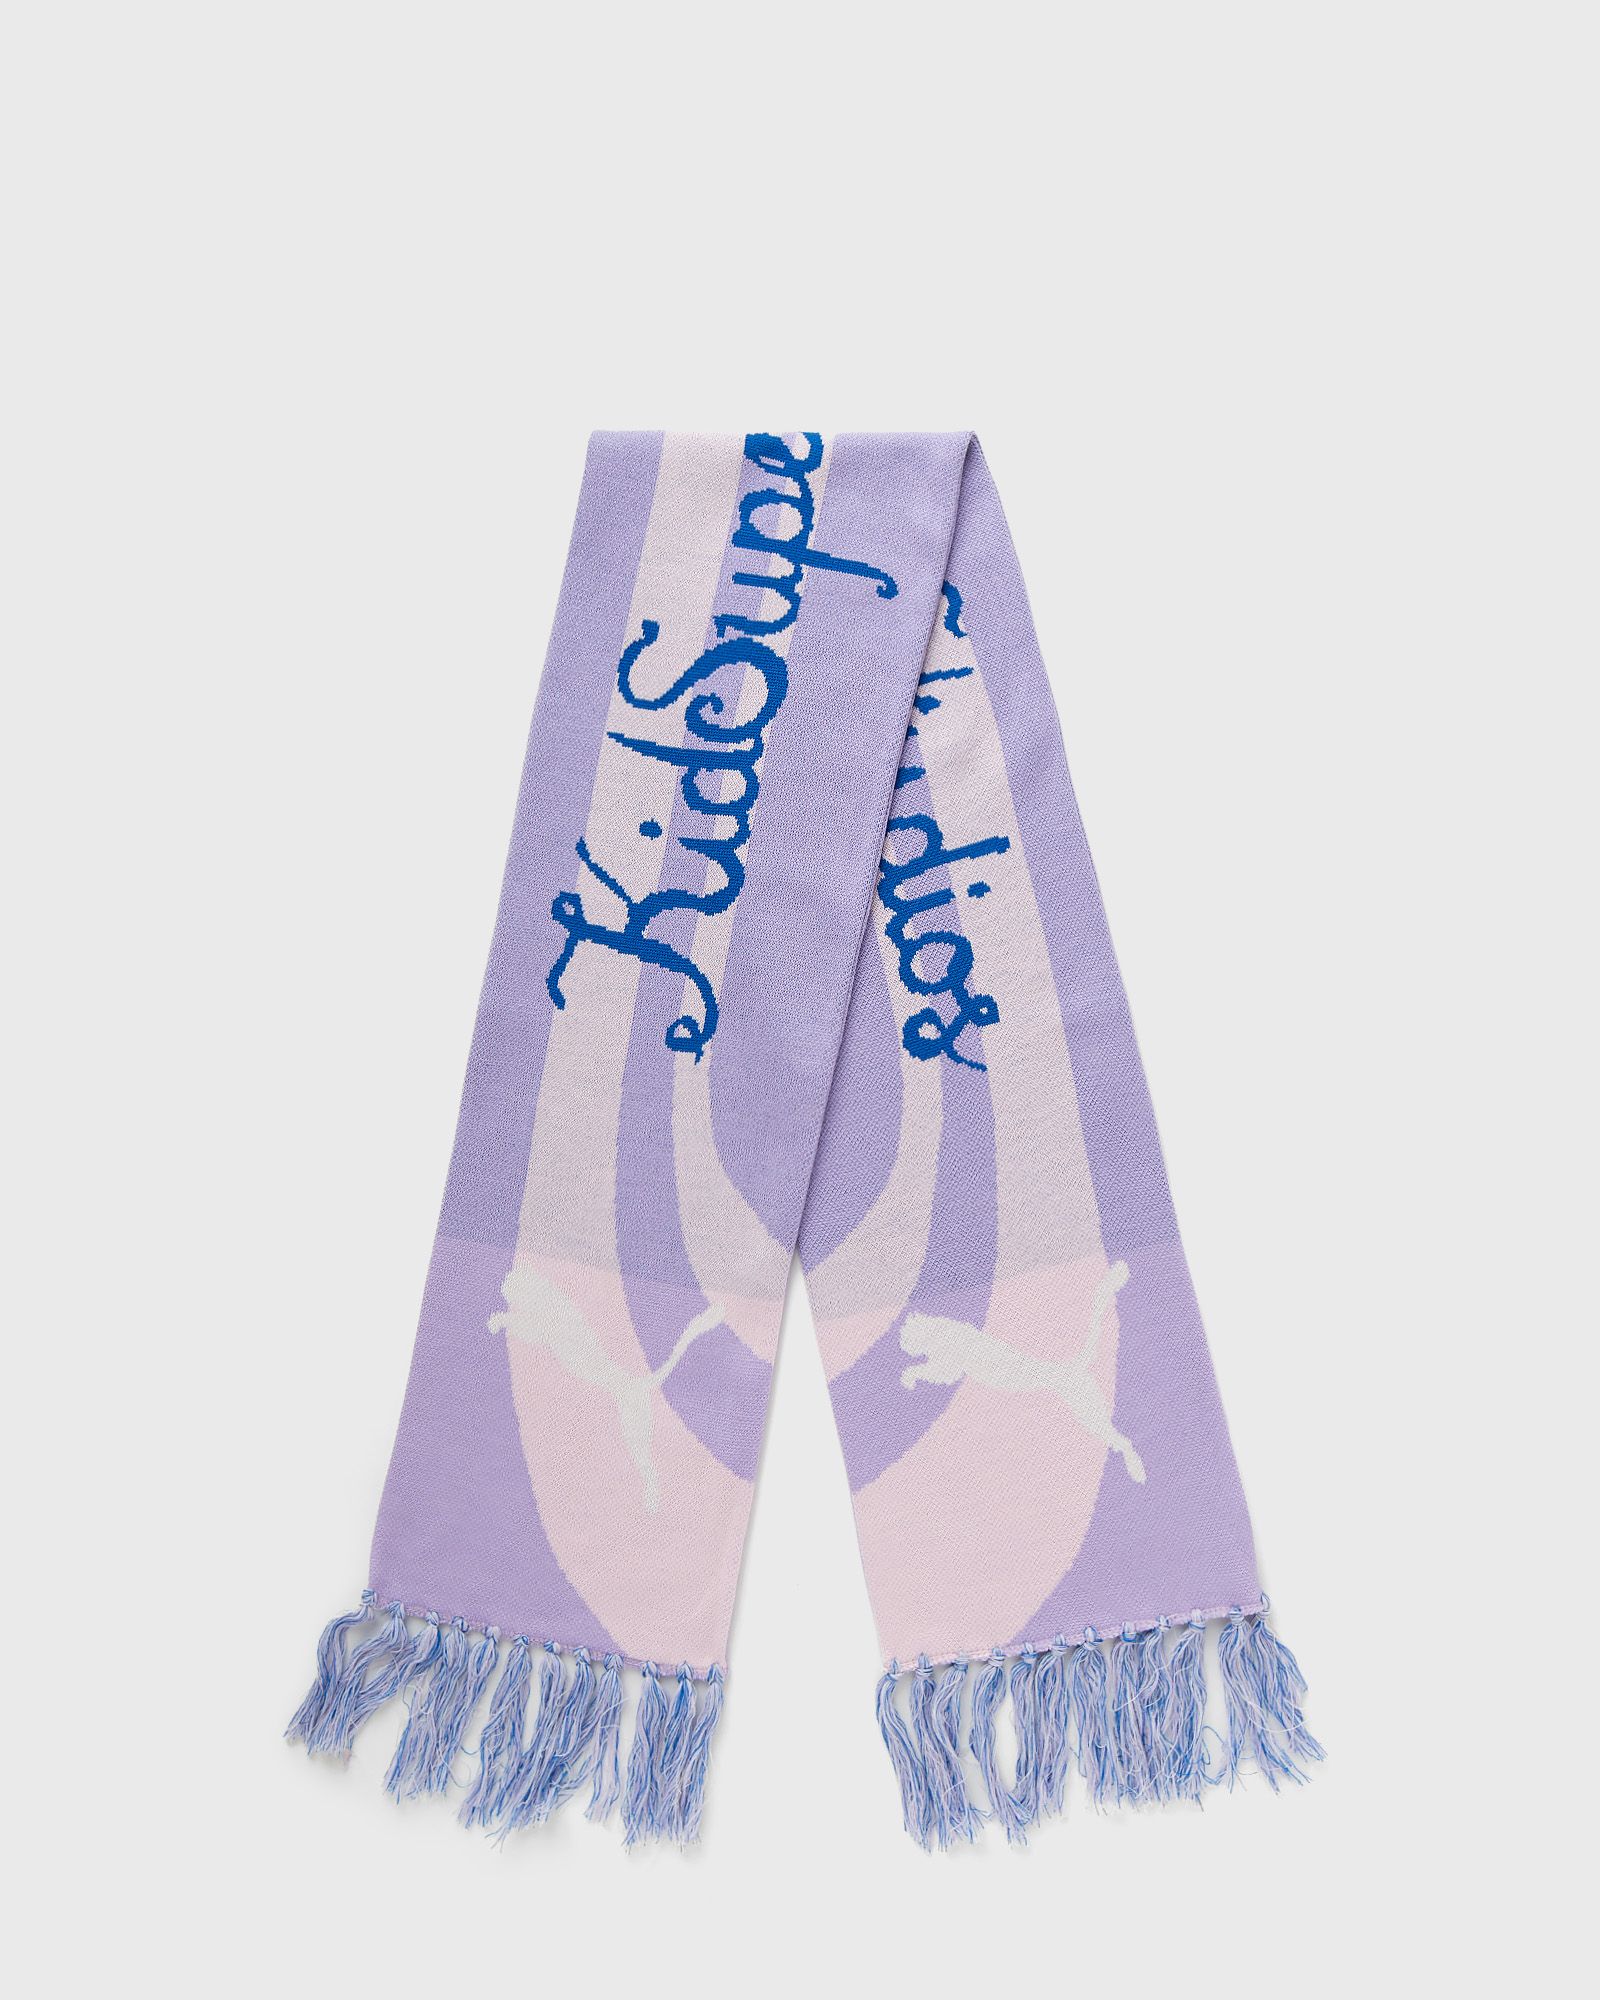 Puma - x kidsuper scarf men scarves purple in größe:one size